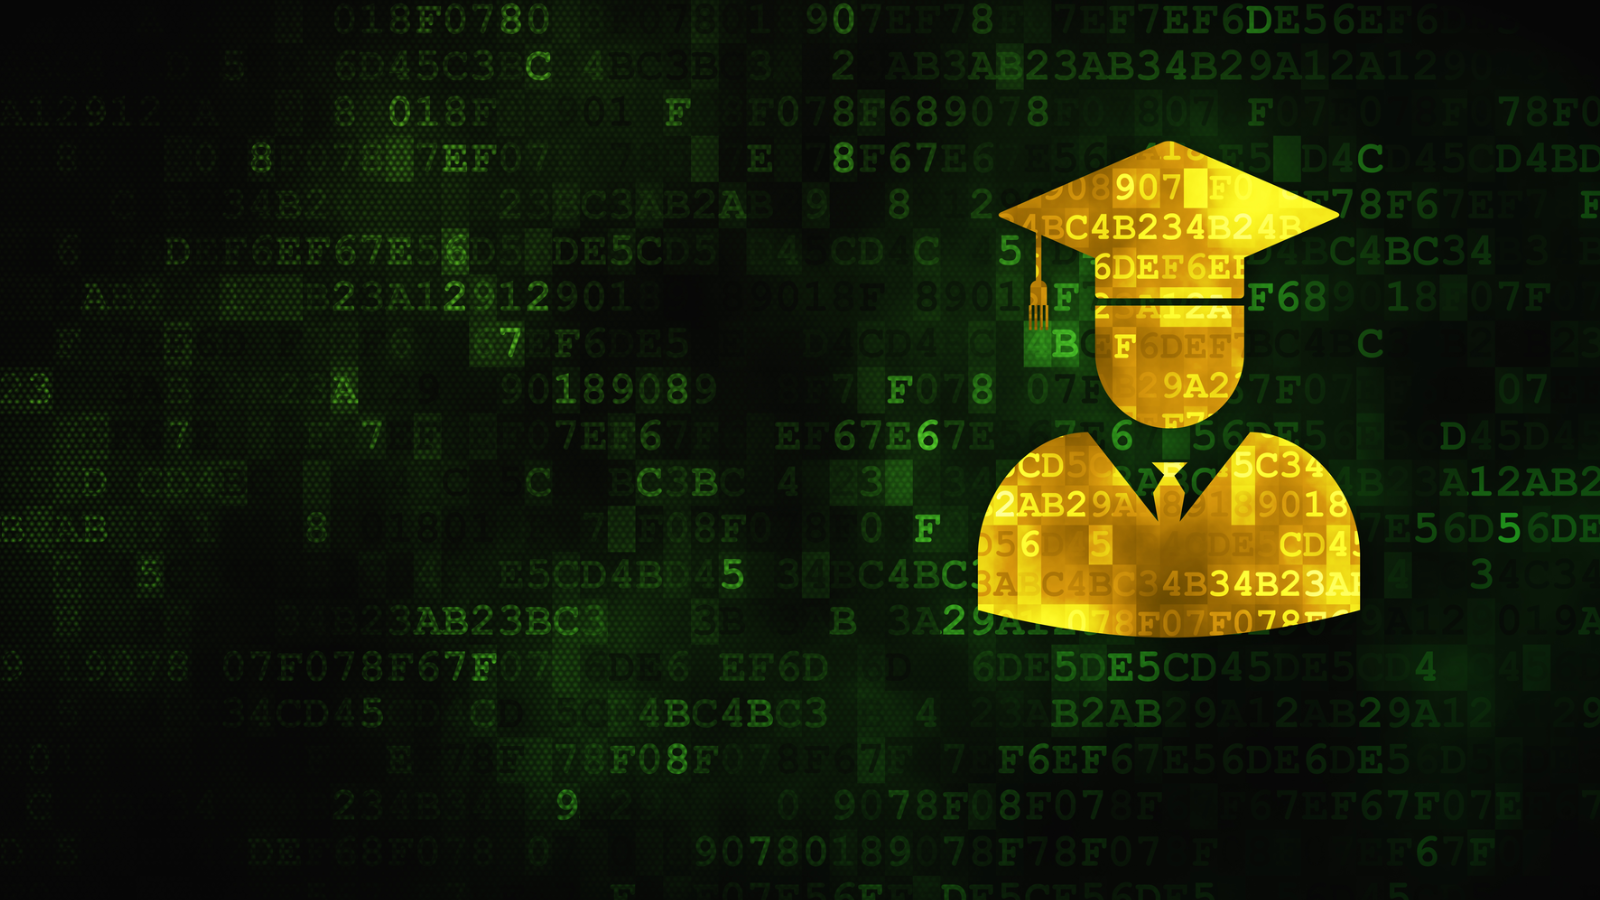 Animation of graduation cap under computer code